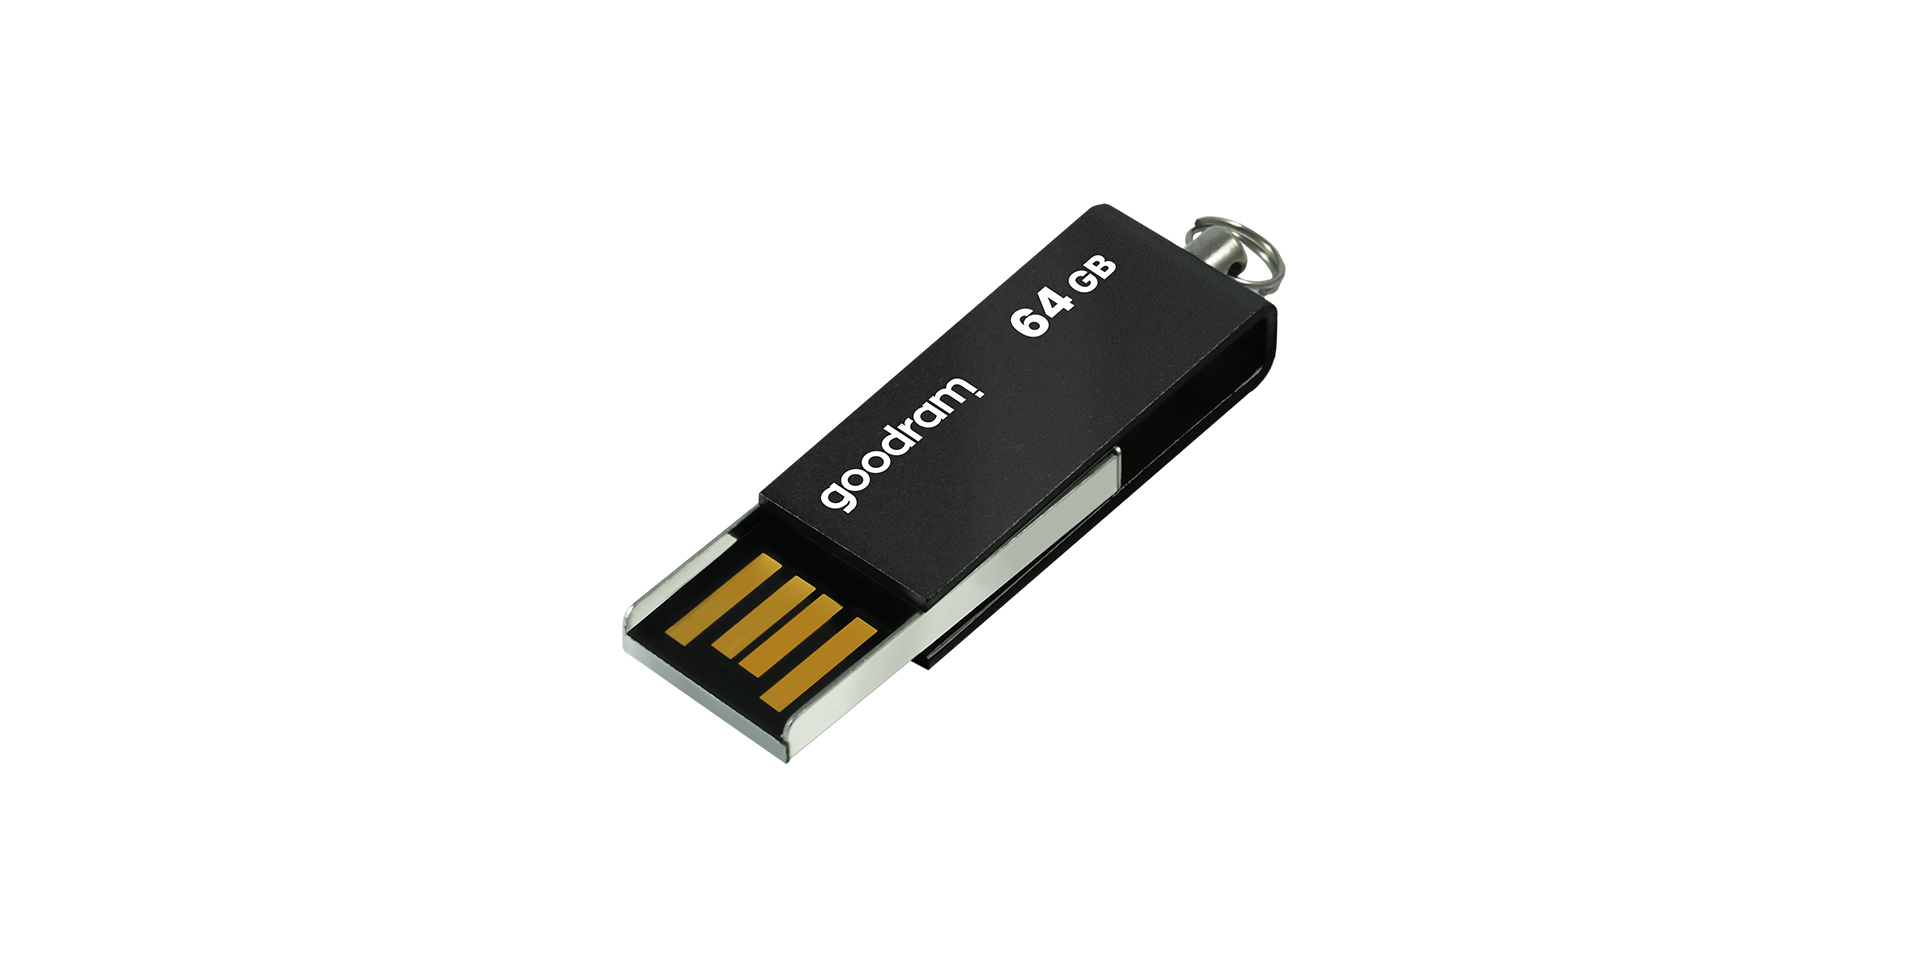 8GB USB 2.0 Black - UCU2